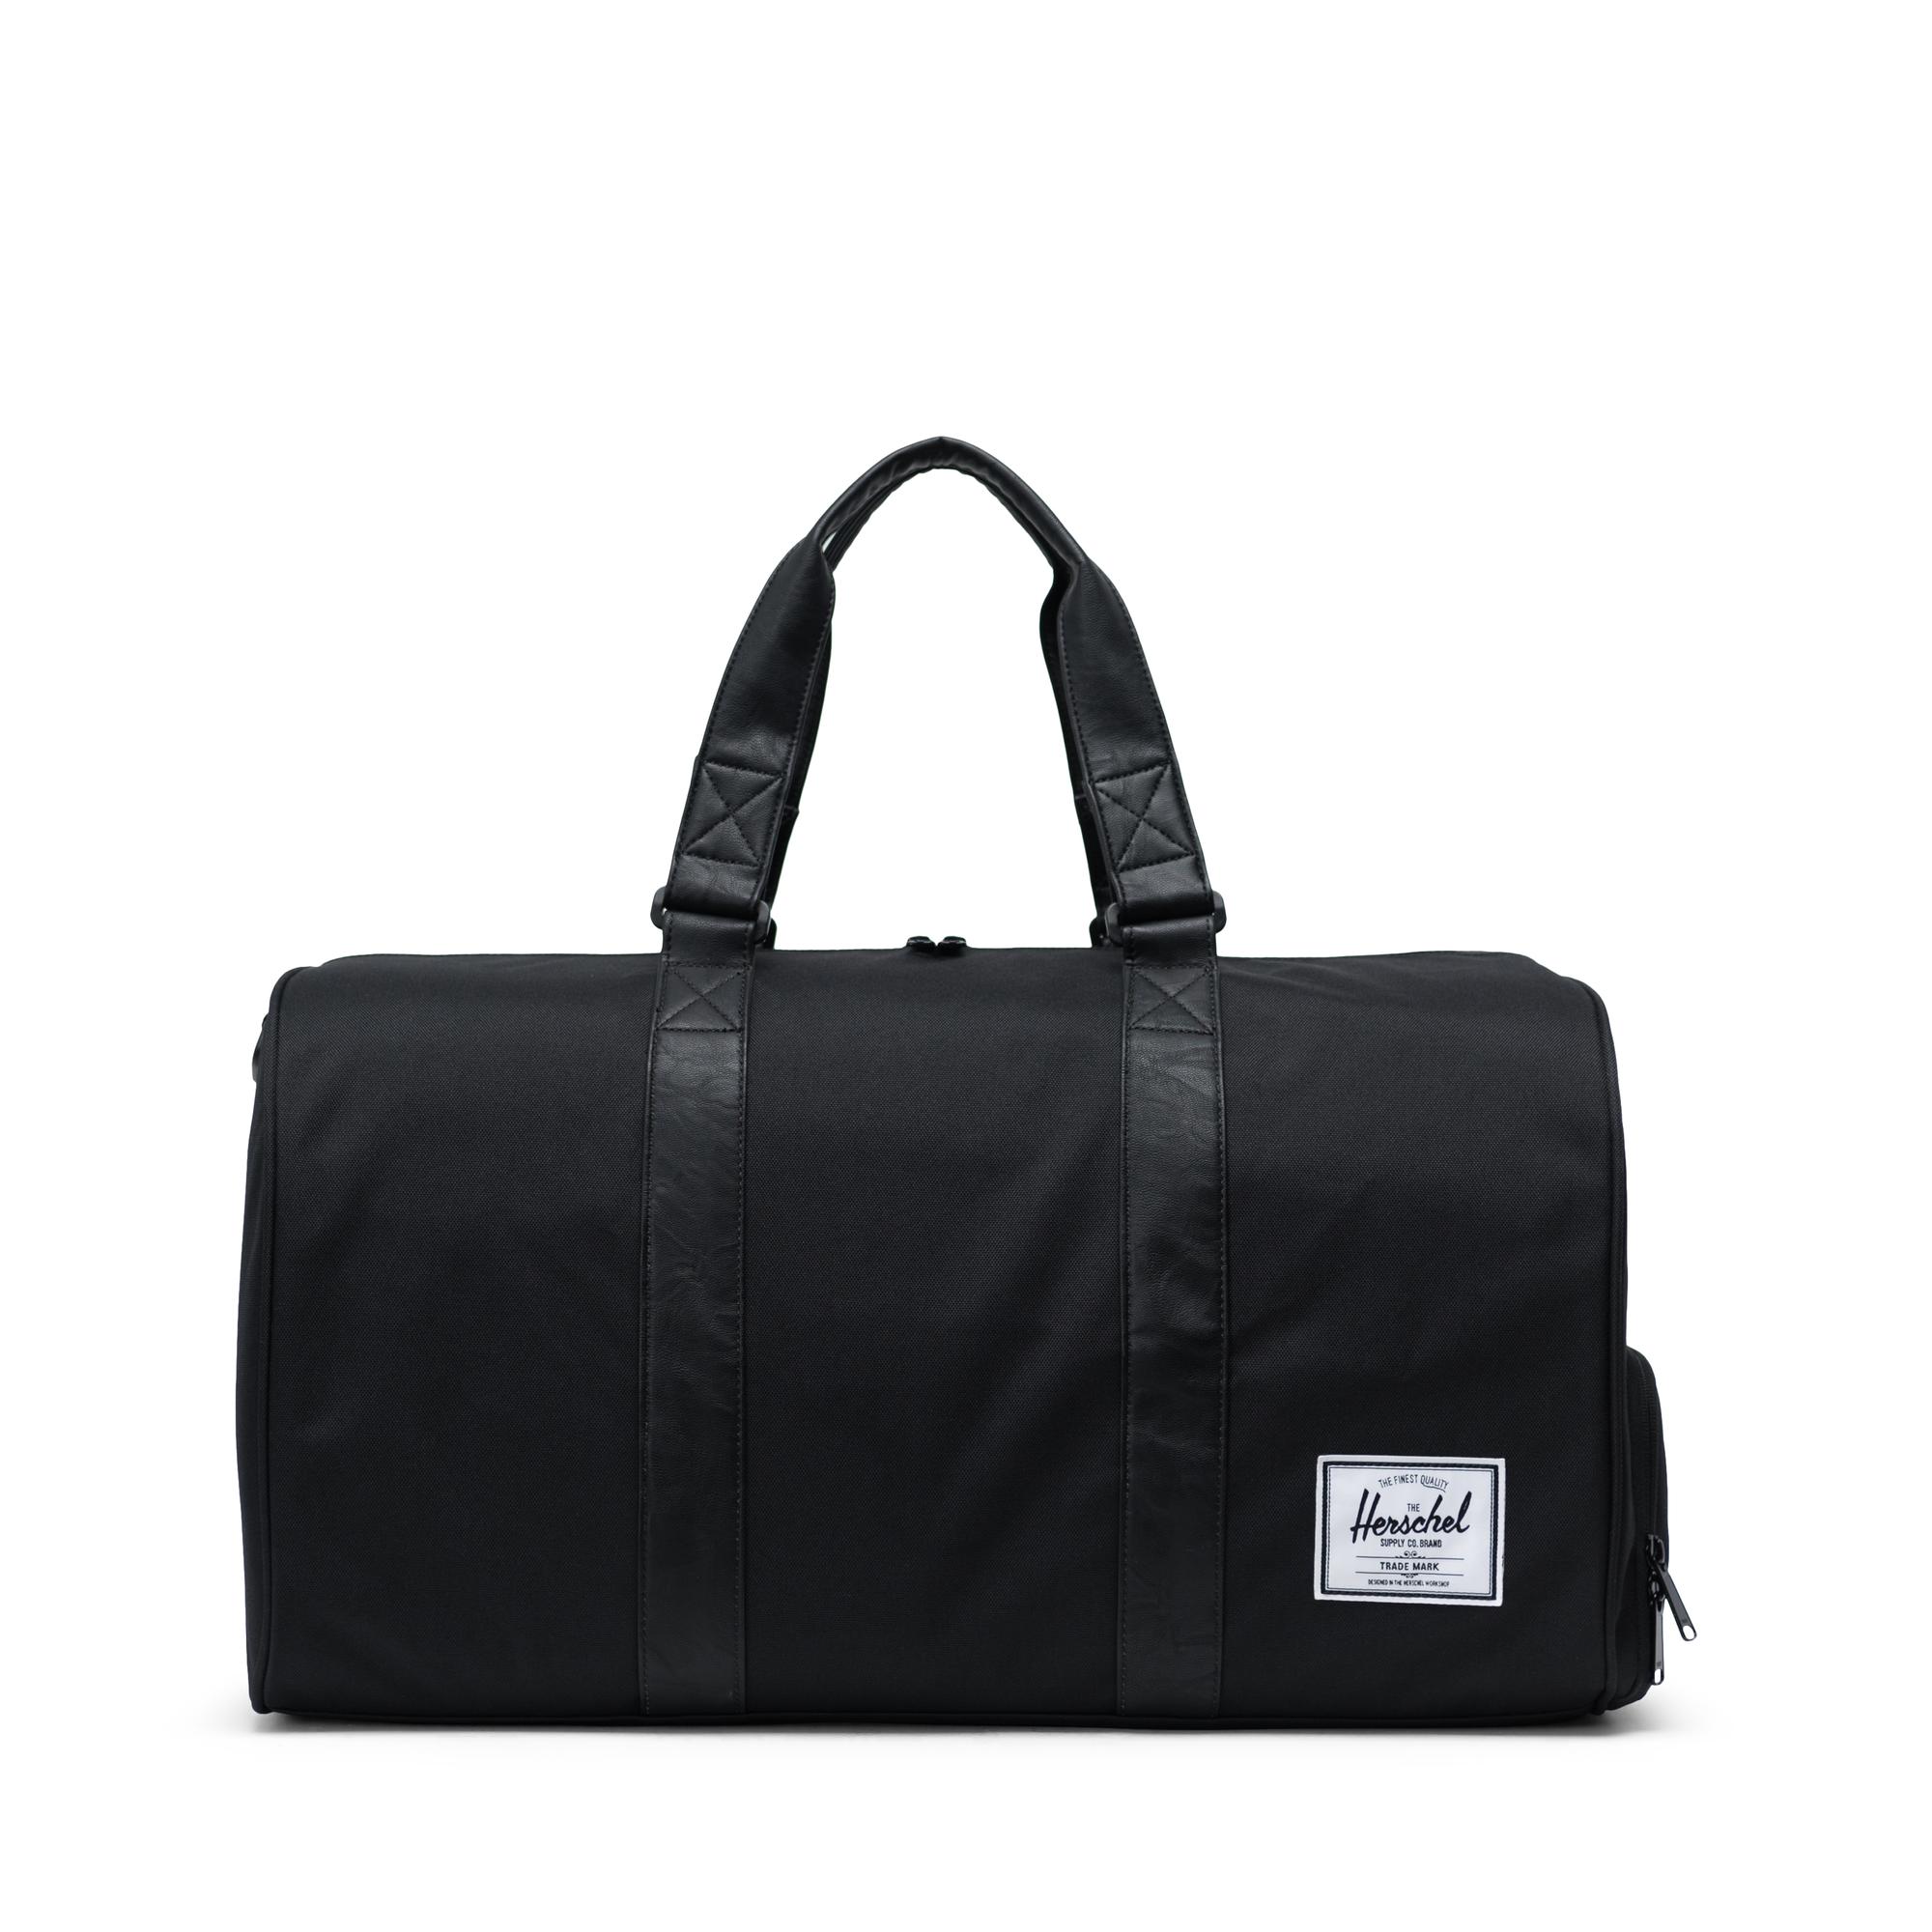 Novel Duffel Bag Black/Black One Size Herschel Supply Co